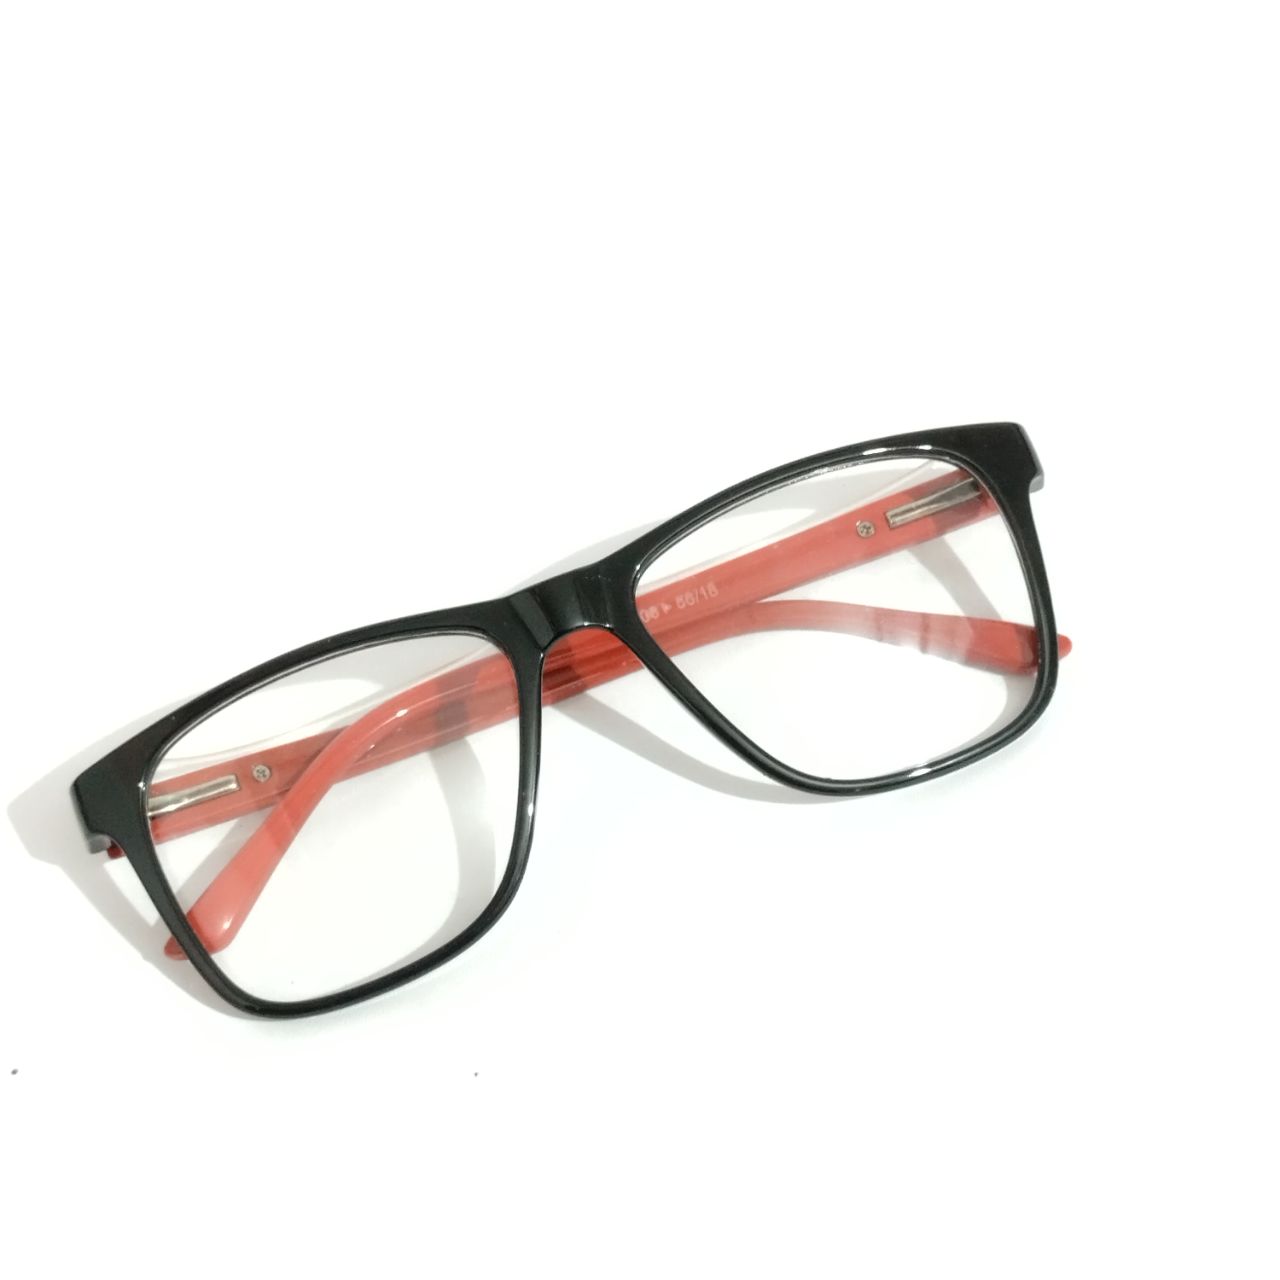 VisionRevive Full Frame Ptosis Crutch Glasses